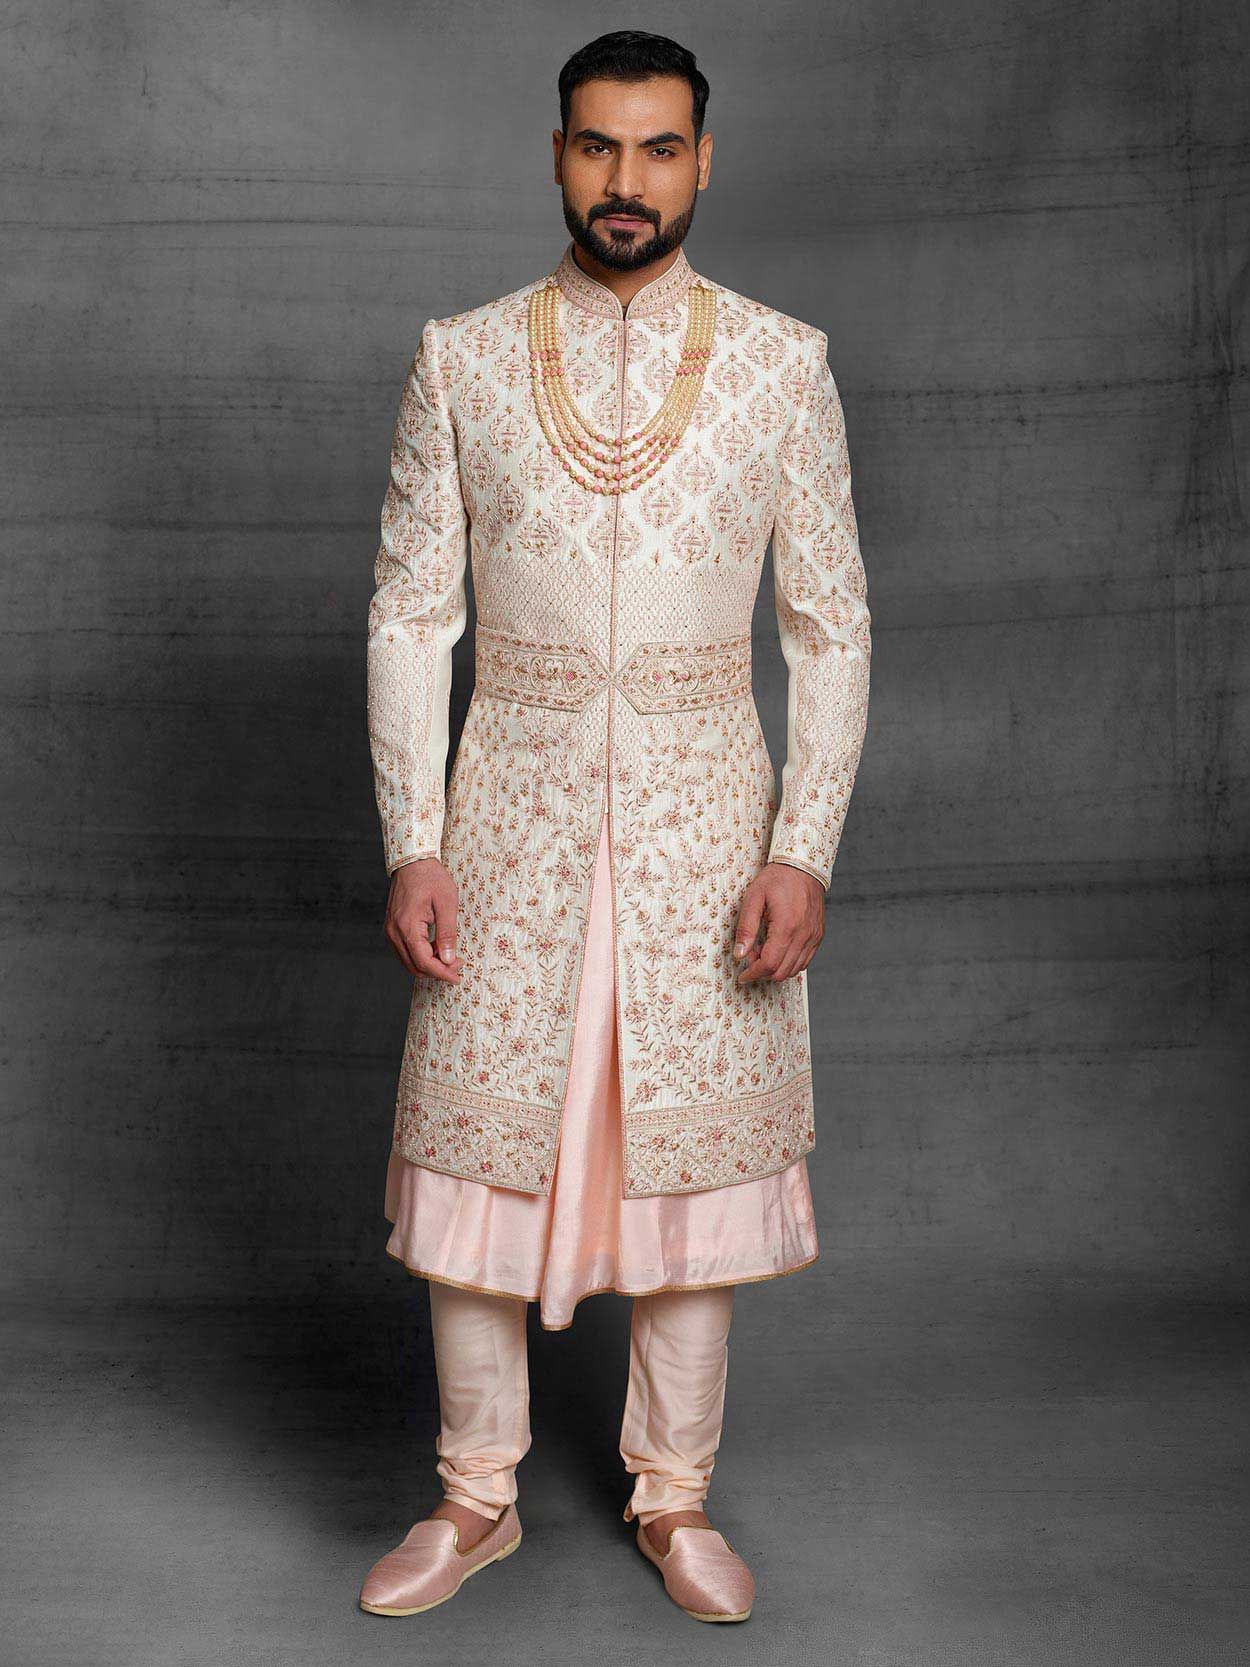 Peach Pink Color Mens Shoes | Men Mojari | Shoes for Sherwani | Mens Shoes for Indian Wedding | Shoe for Indian Kurta | Jutti for Wedding 13 US Men's